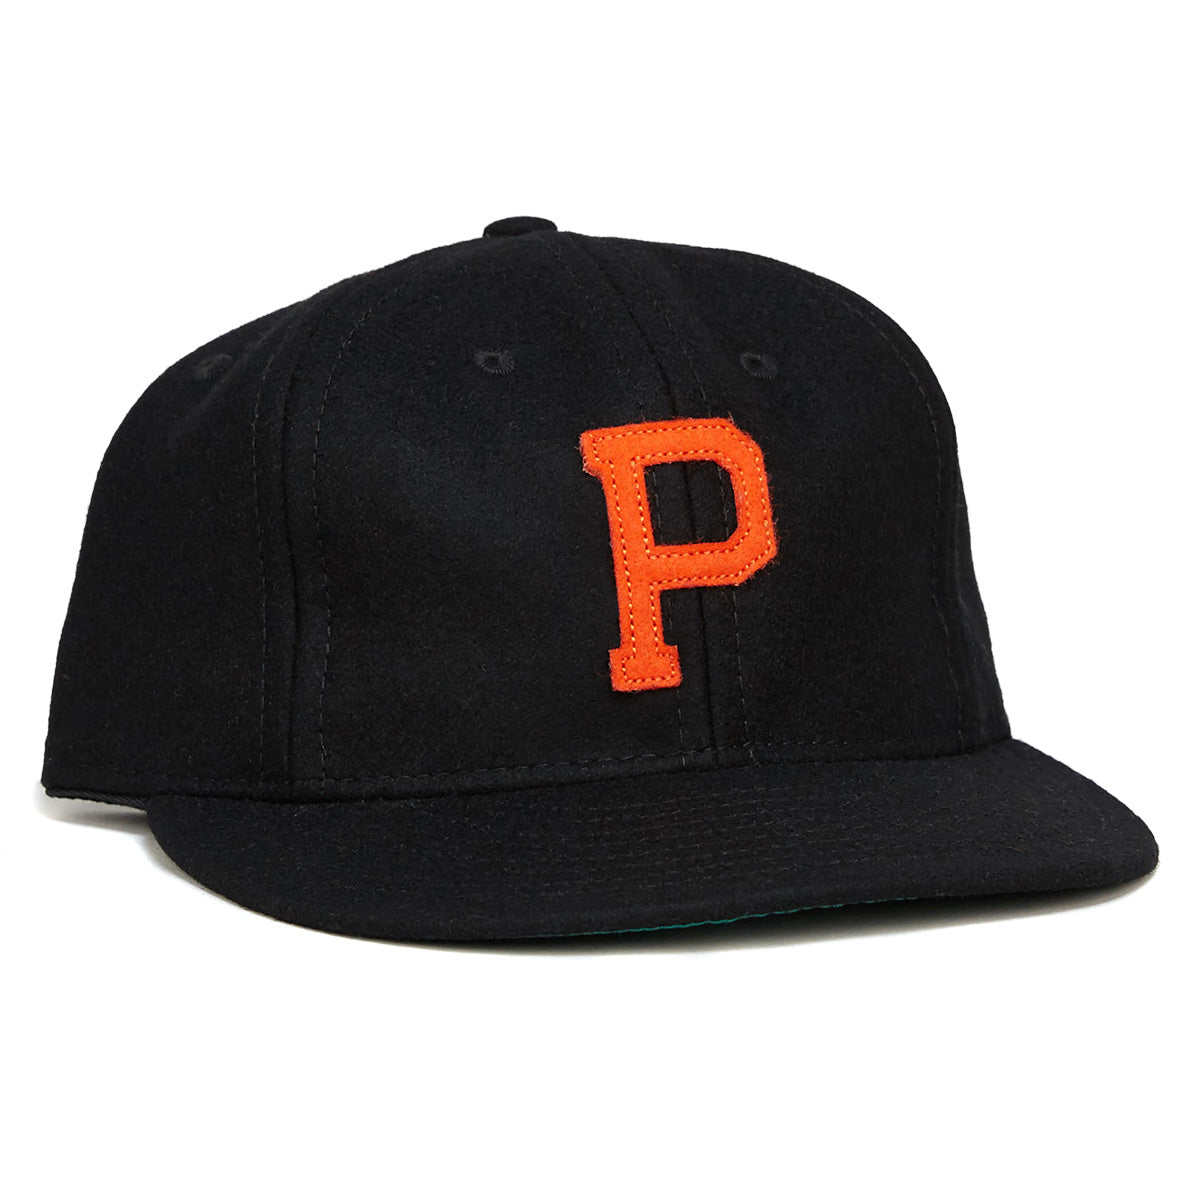 Princeton University 1947 Vintage Ballcap